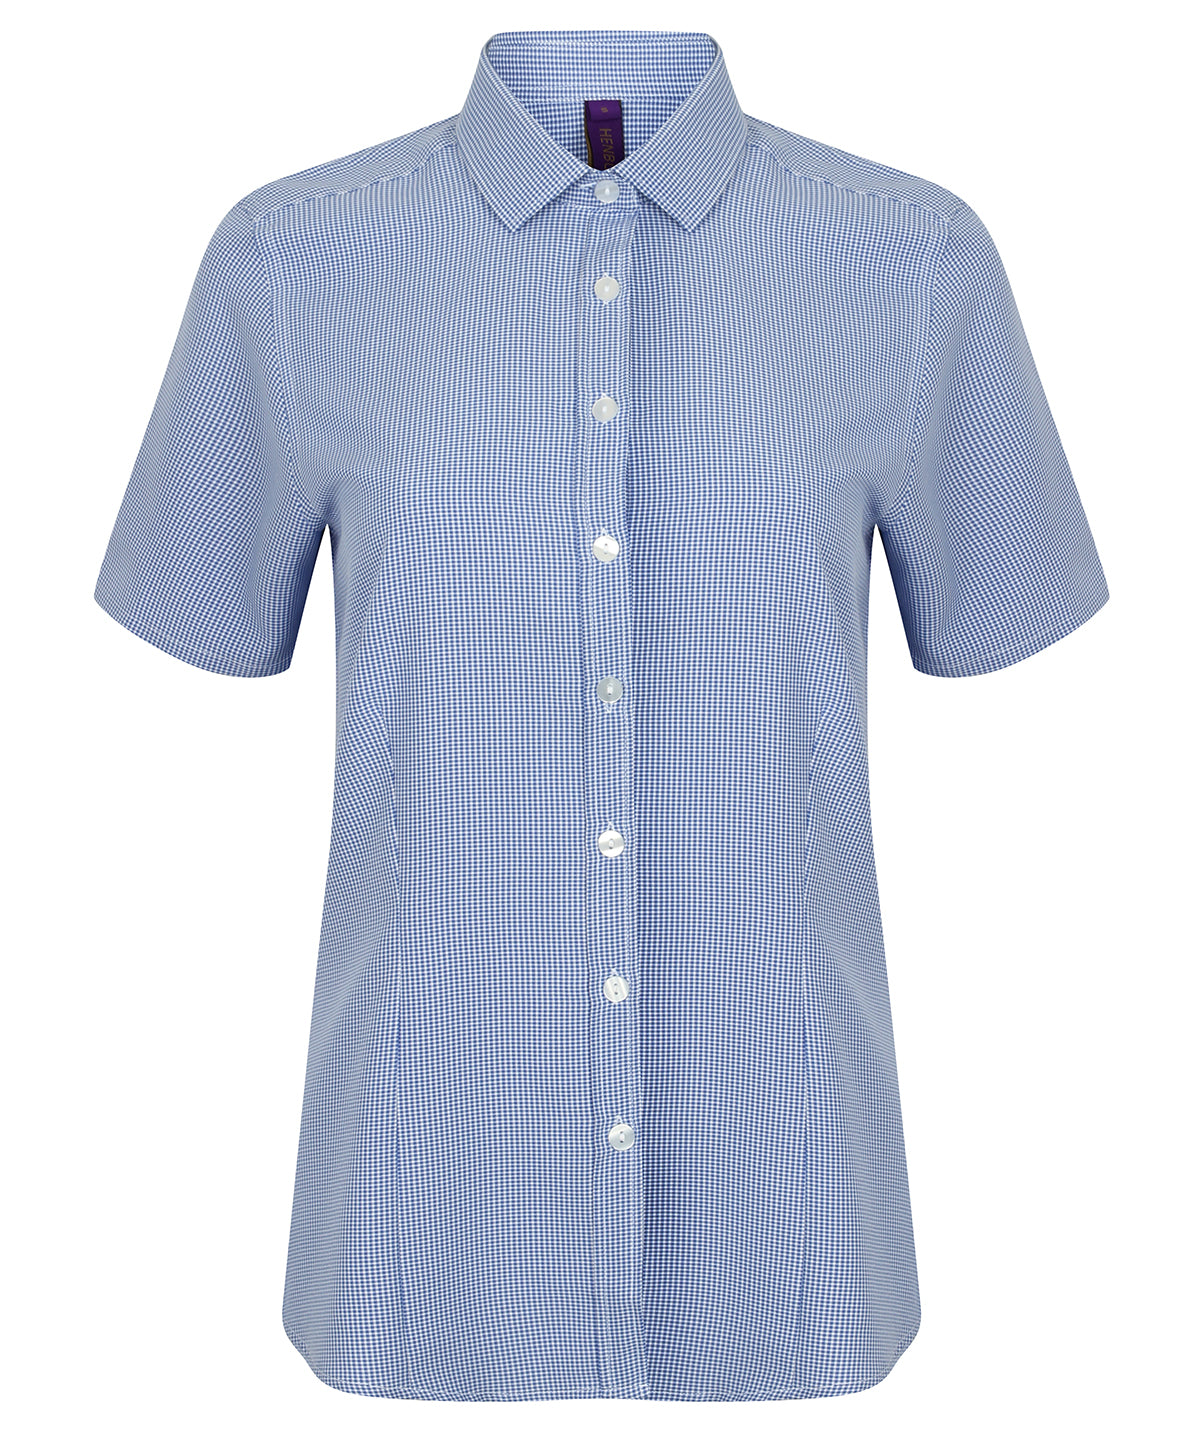 Bolir - Women's Gingham Pufy Wicking Short Sleeve Shirt